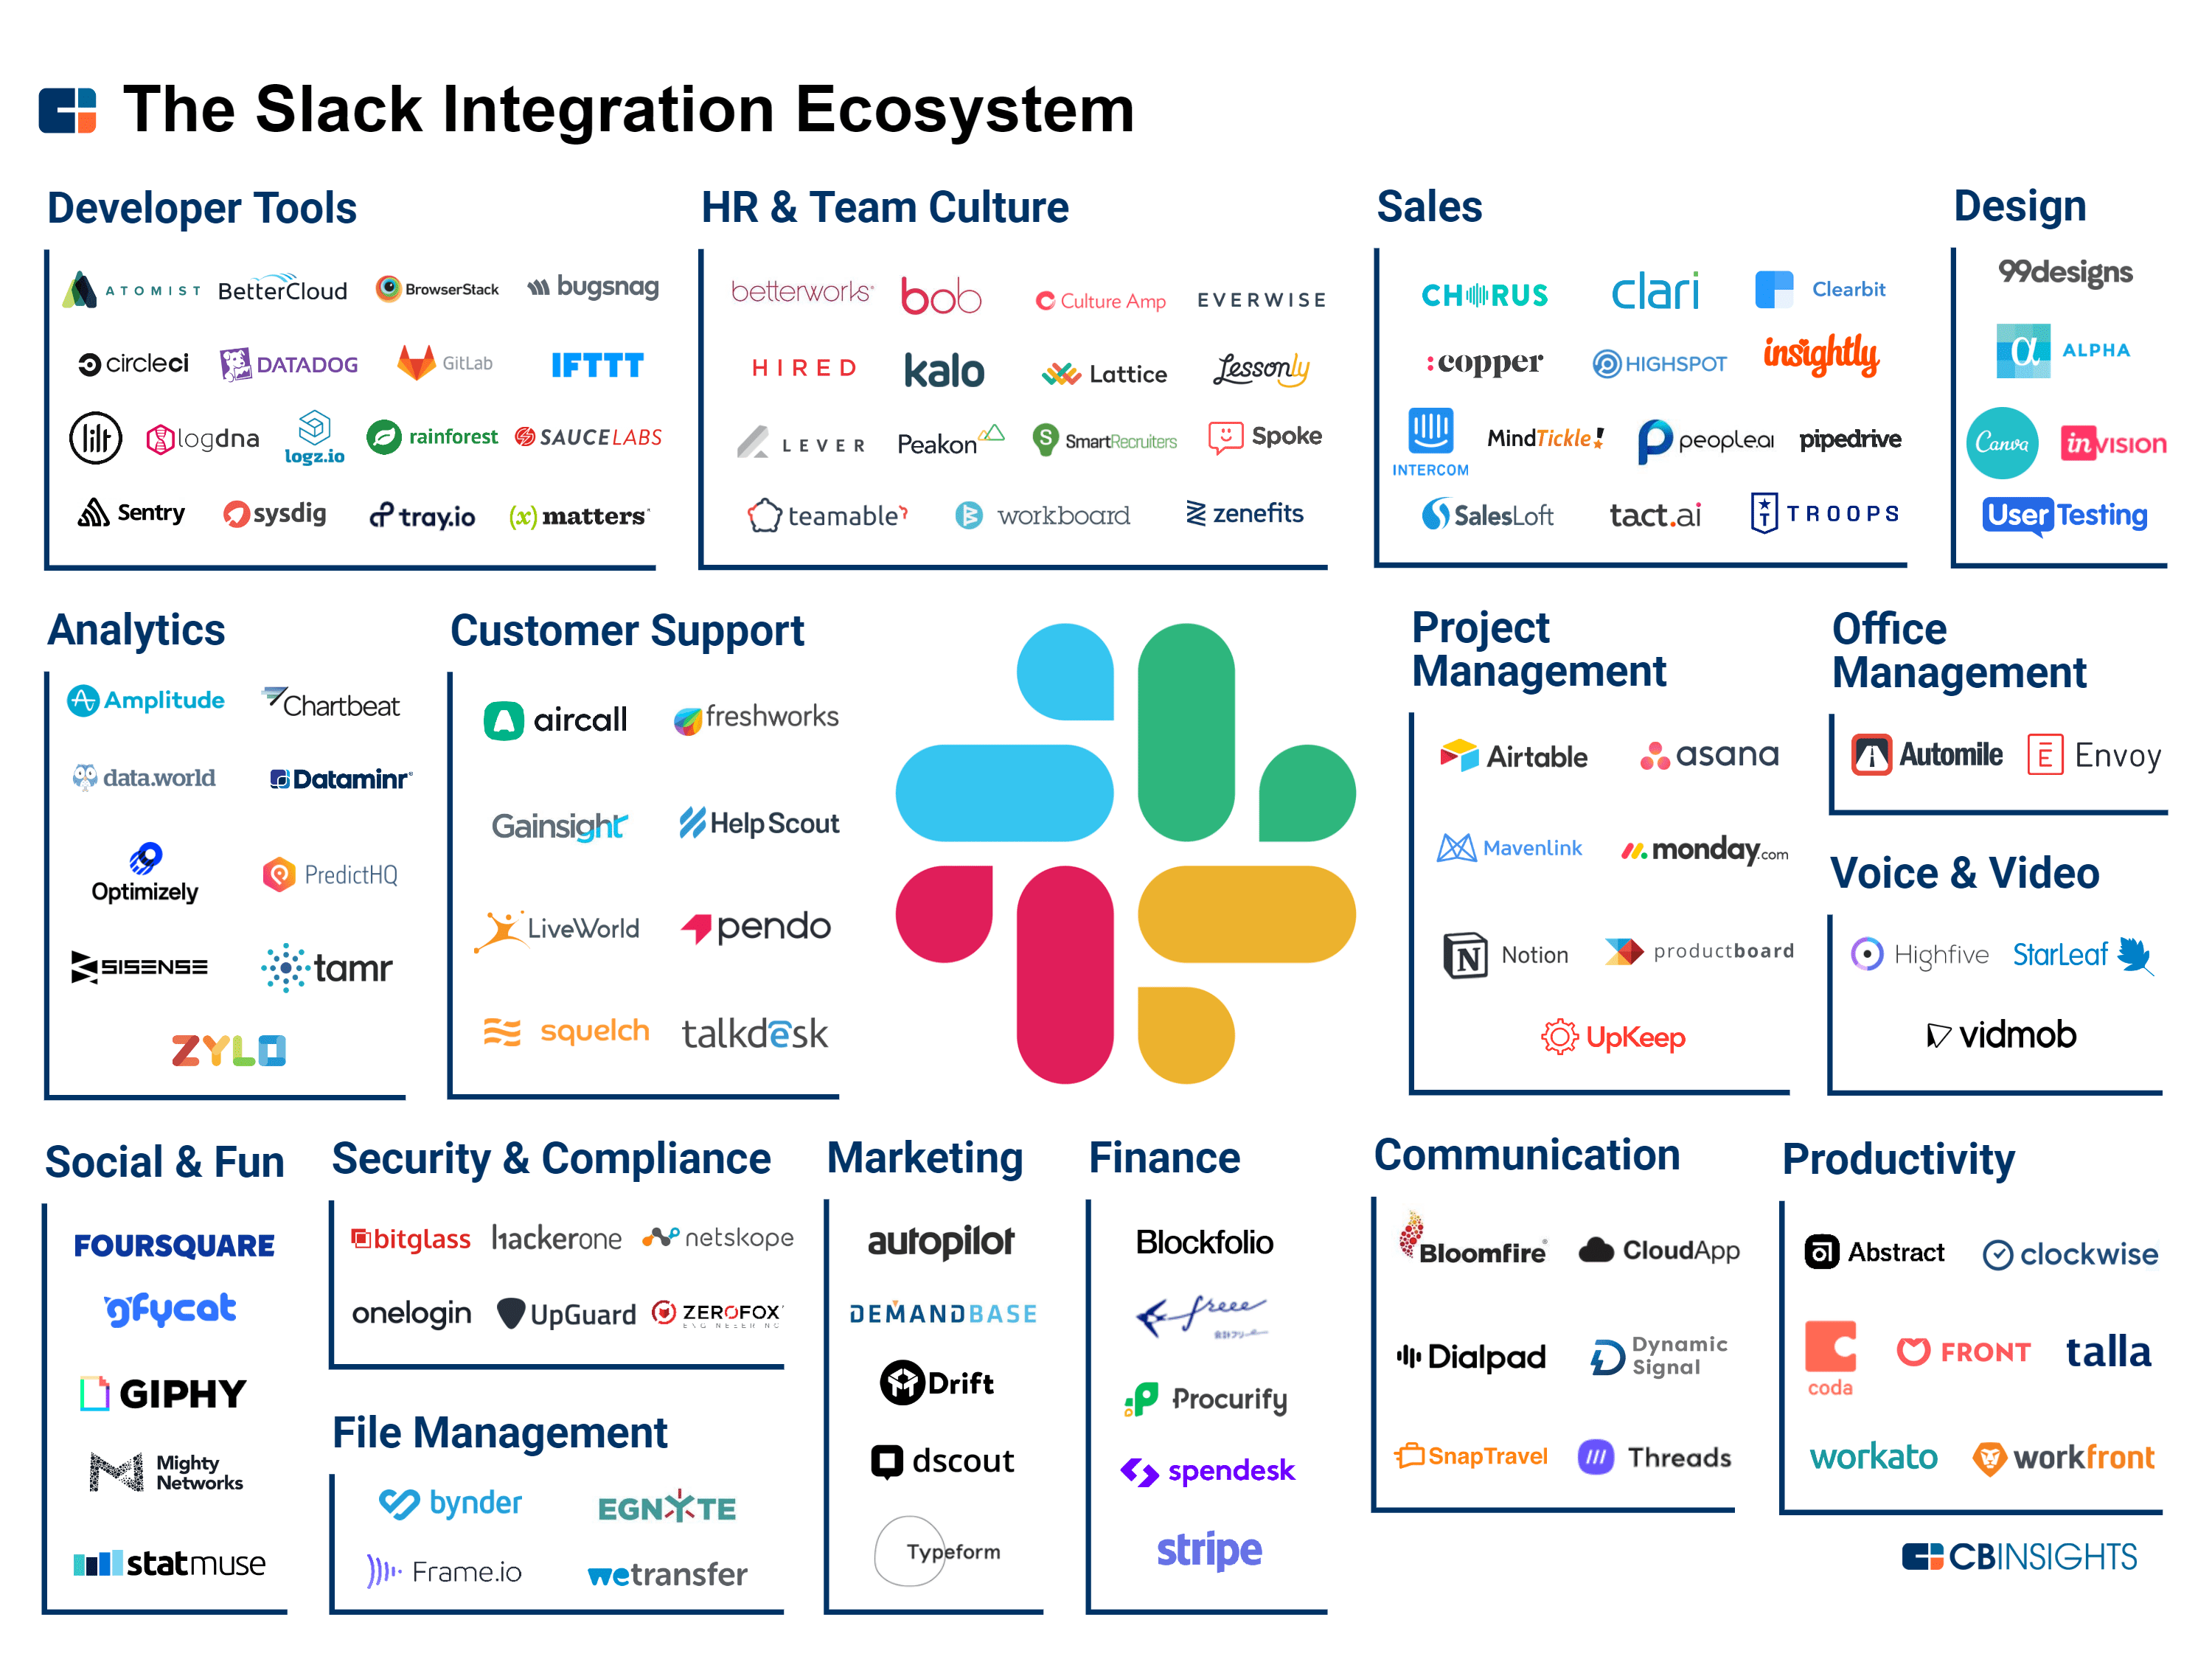 The Slack Integration Ecosystem